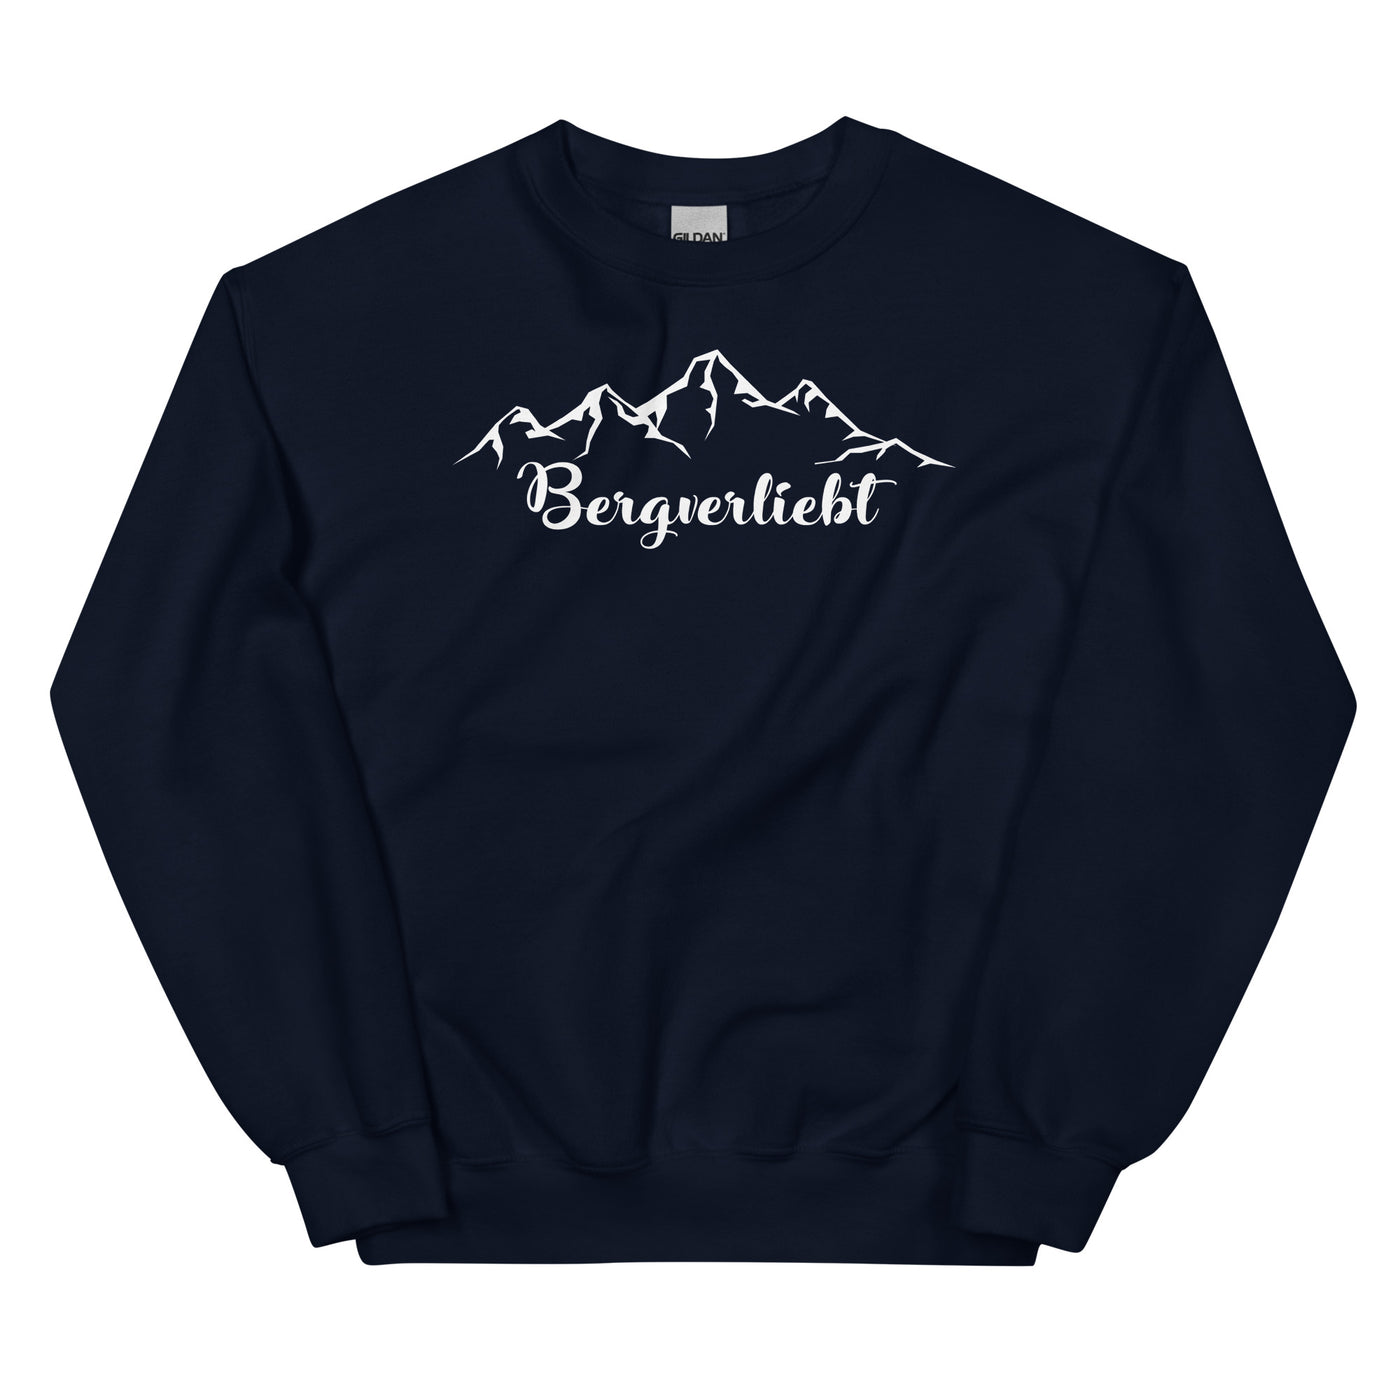 Bergverliebt (13) - Sweatshirt (Unisex) berge Navy